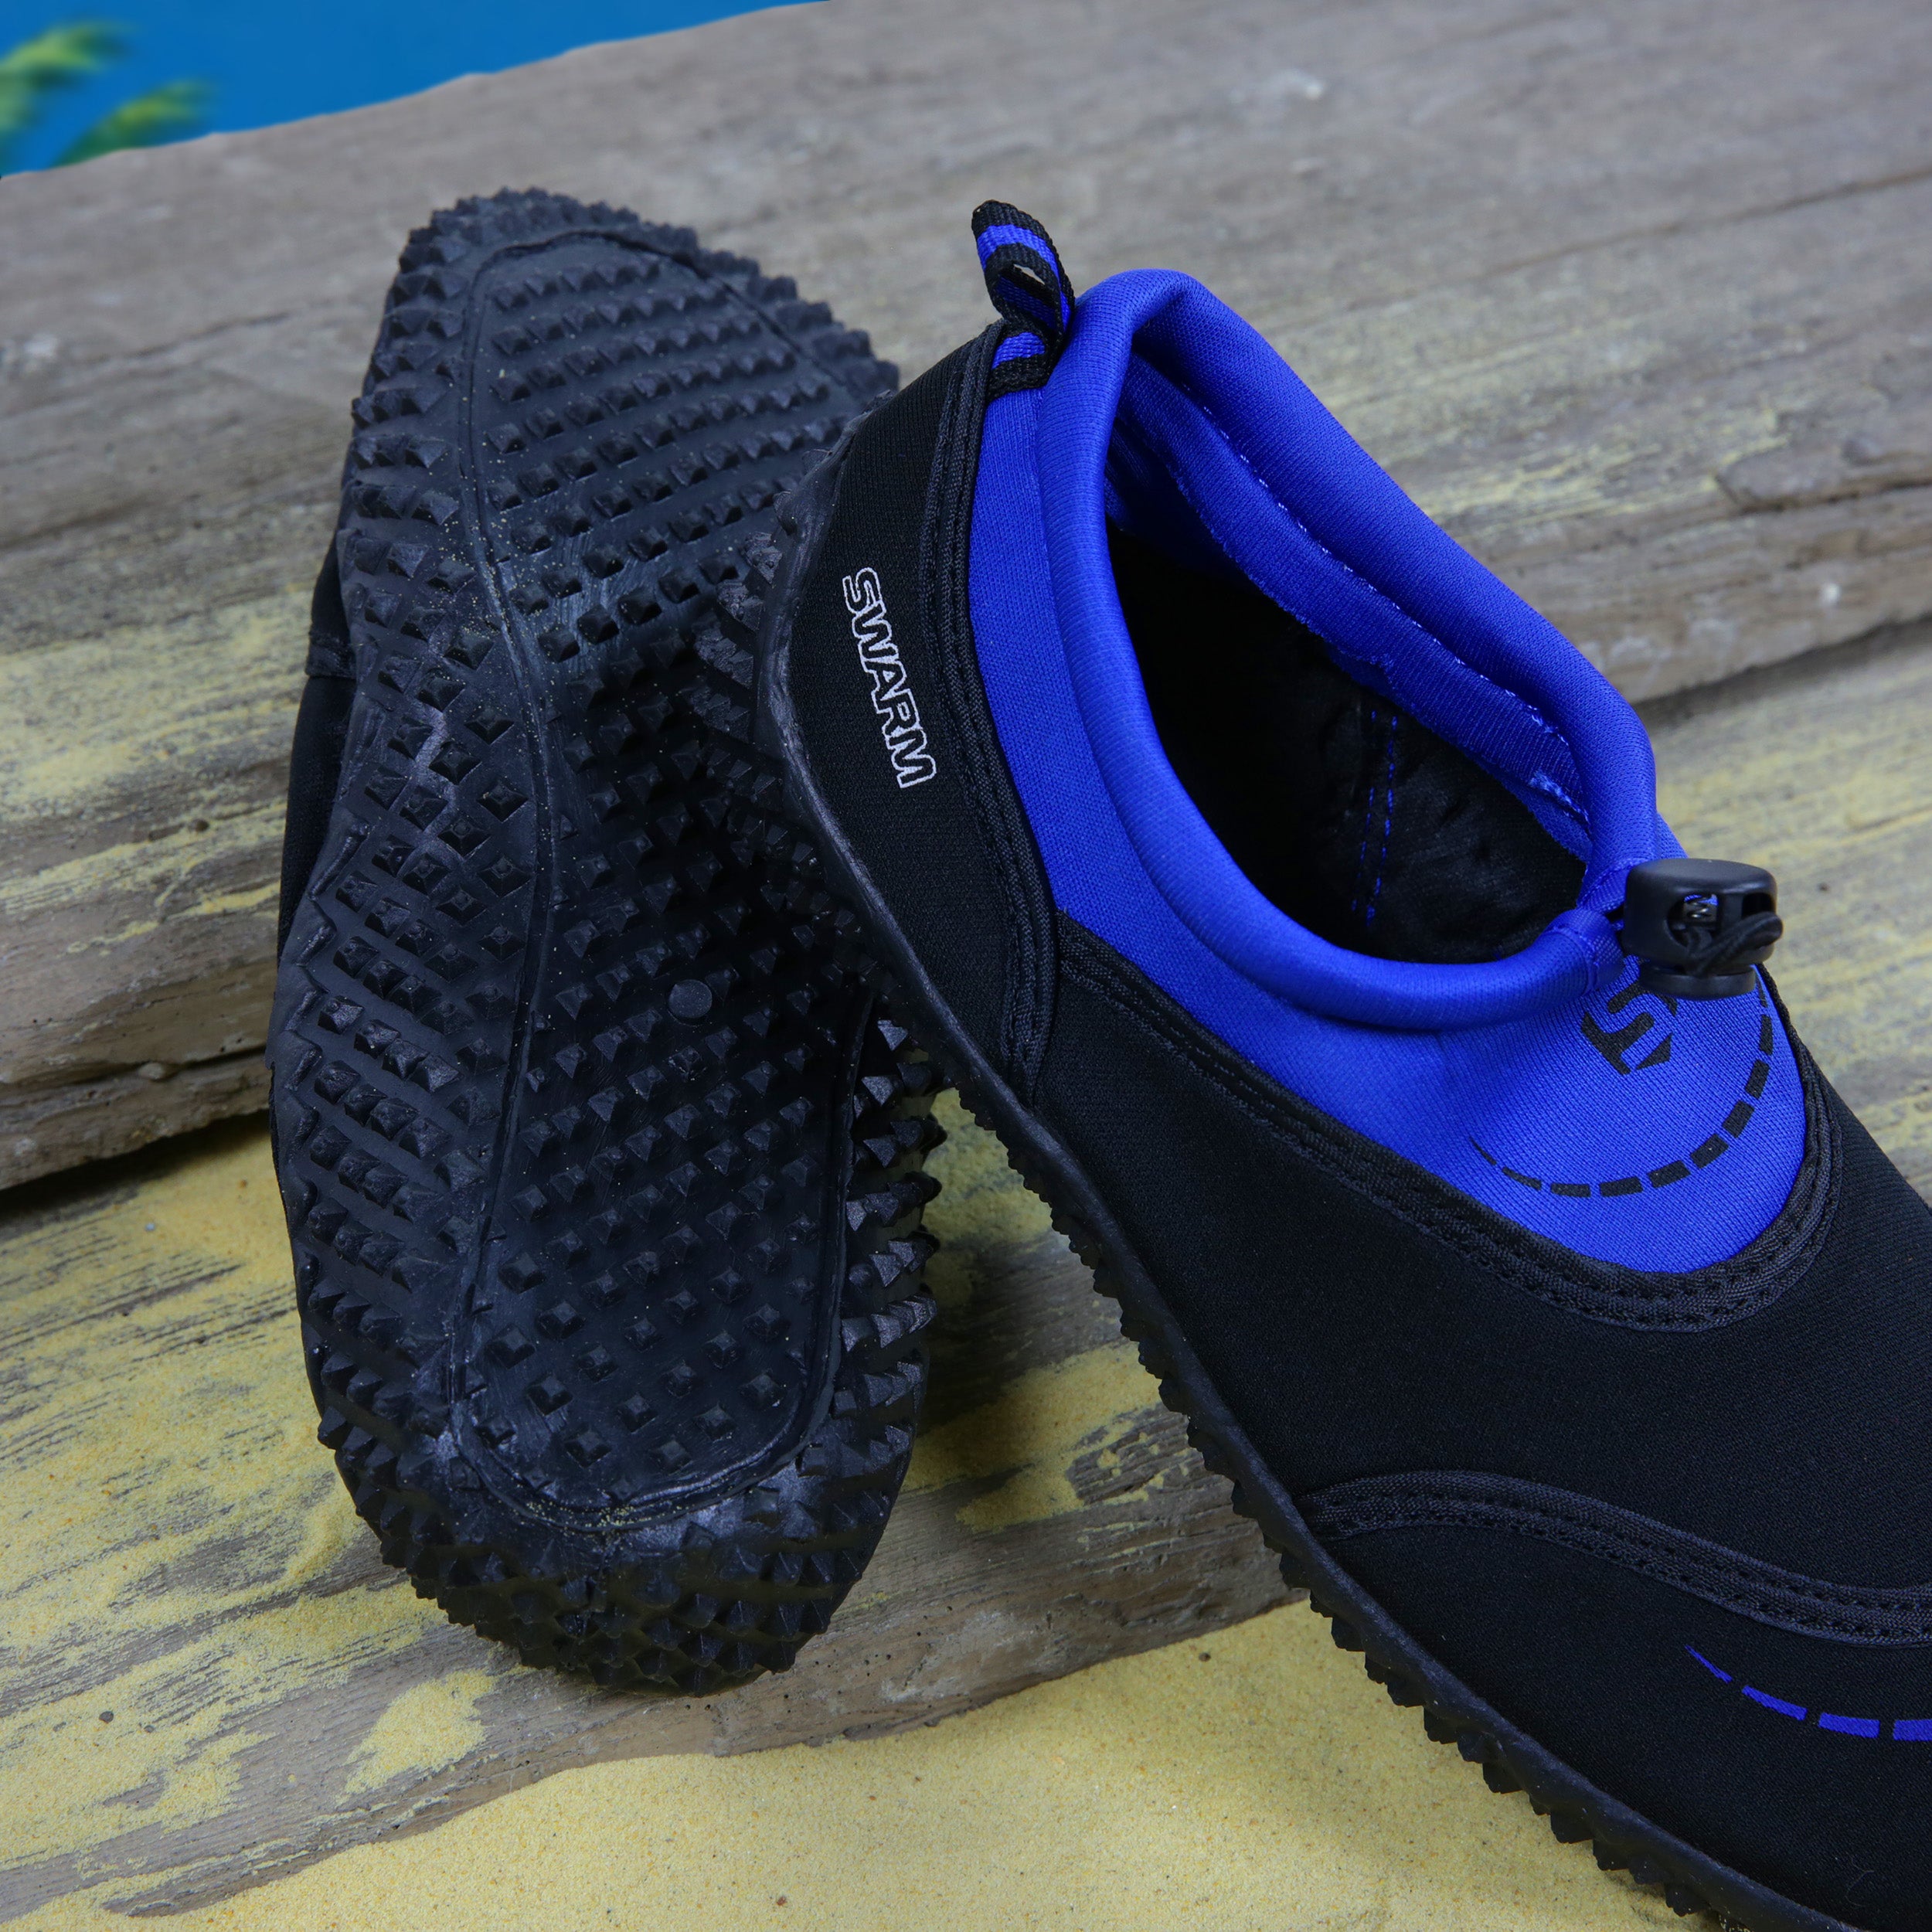 Typhoon Swarm Aqua Beach Shoes Black/Blue - Childs - UK 1 / EUR 33